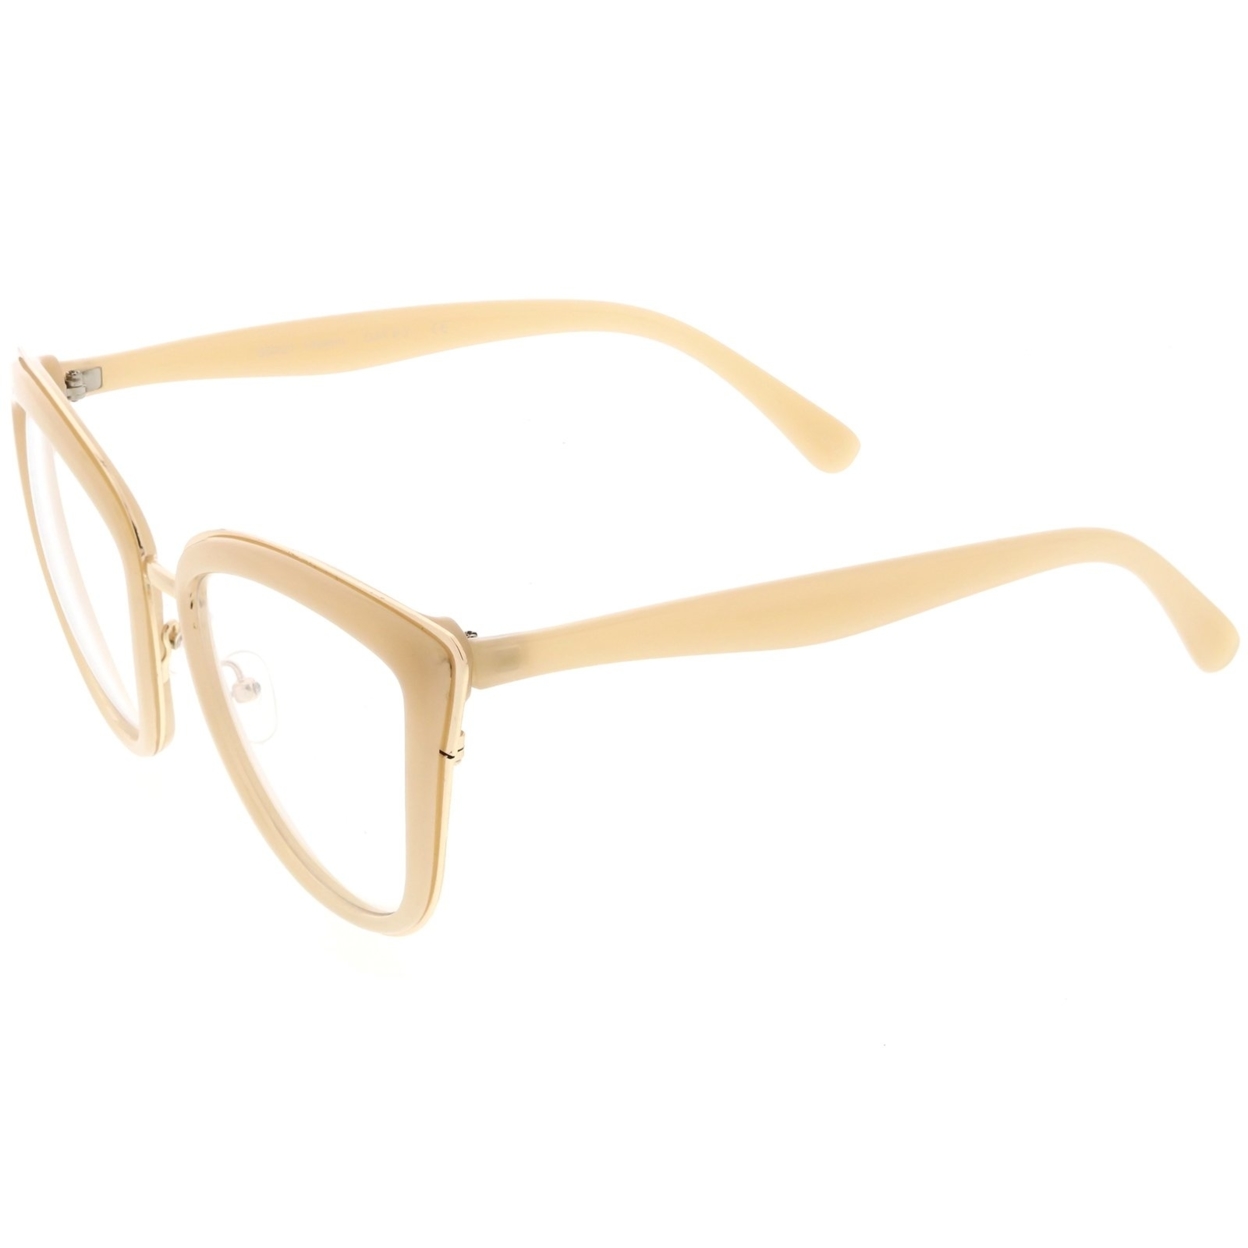 Oversize Rimmed Metal Cat Eye Glasses Clear Lens 55mm - Black Gold / Clear